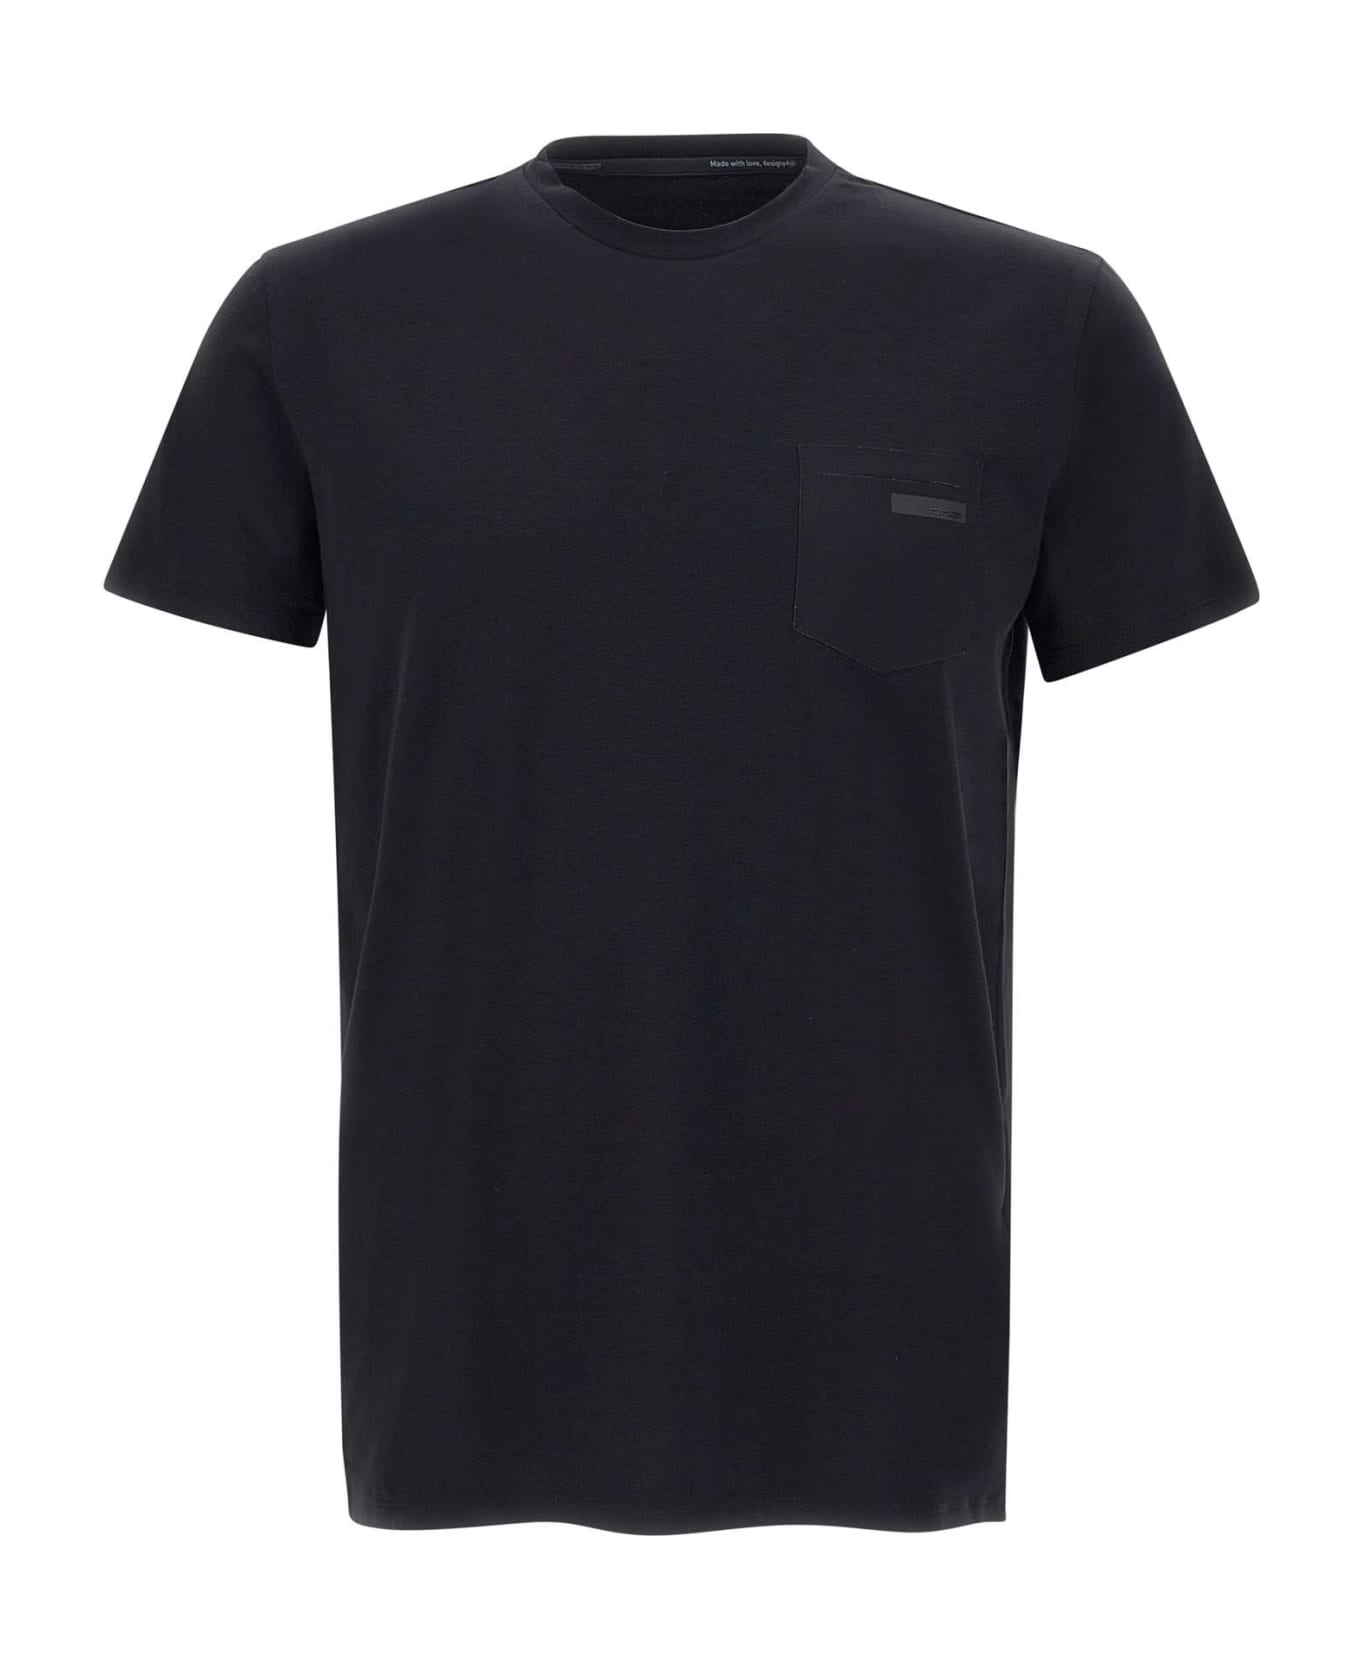 RRD - Roberto Ricci Design "revo Shirty" T-shirt - BLACK